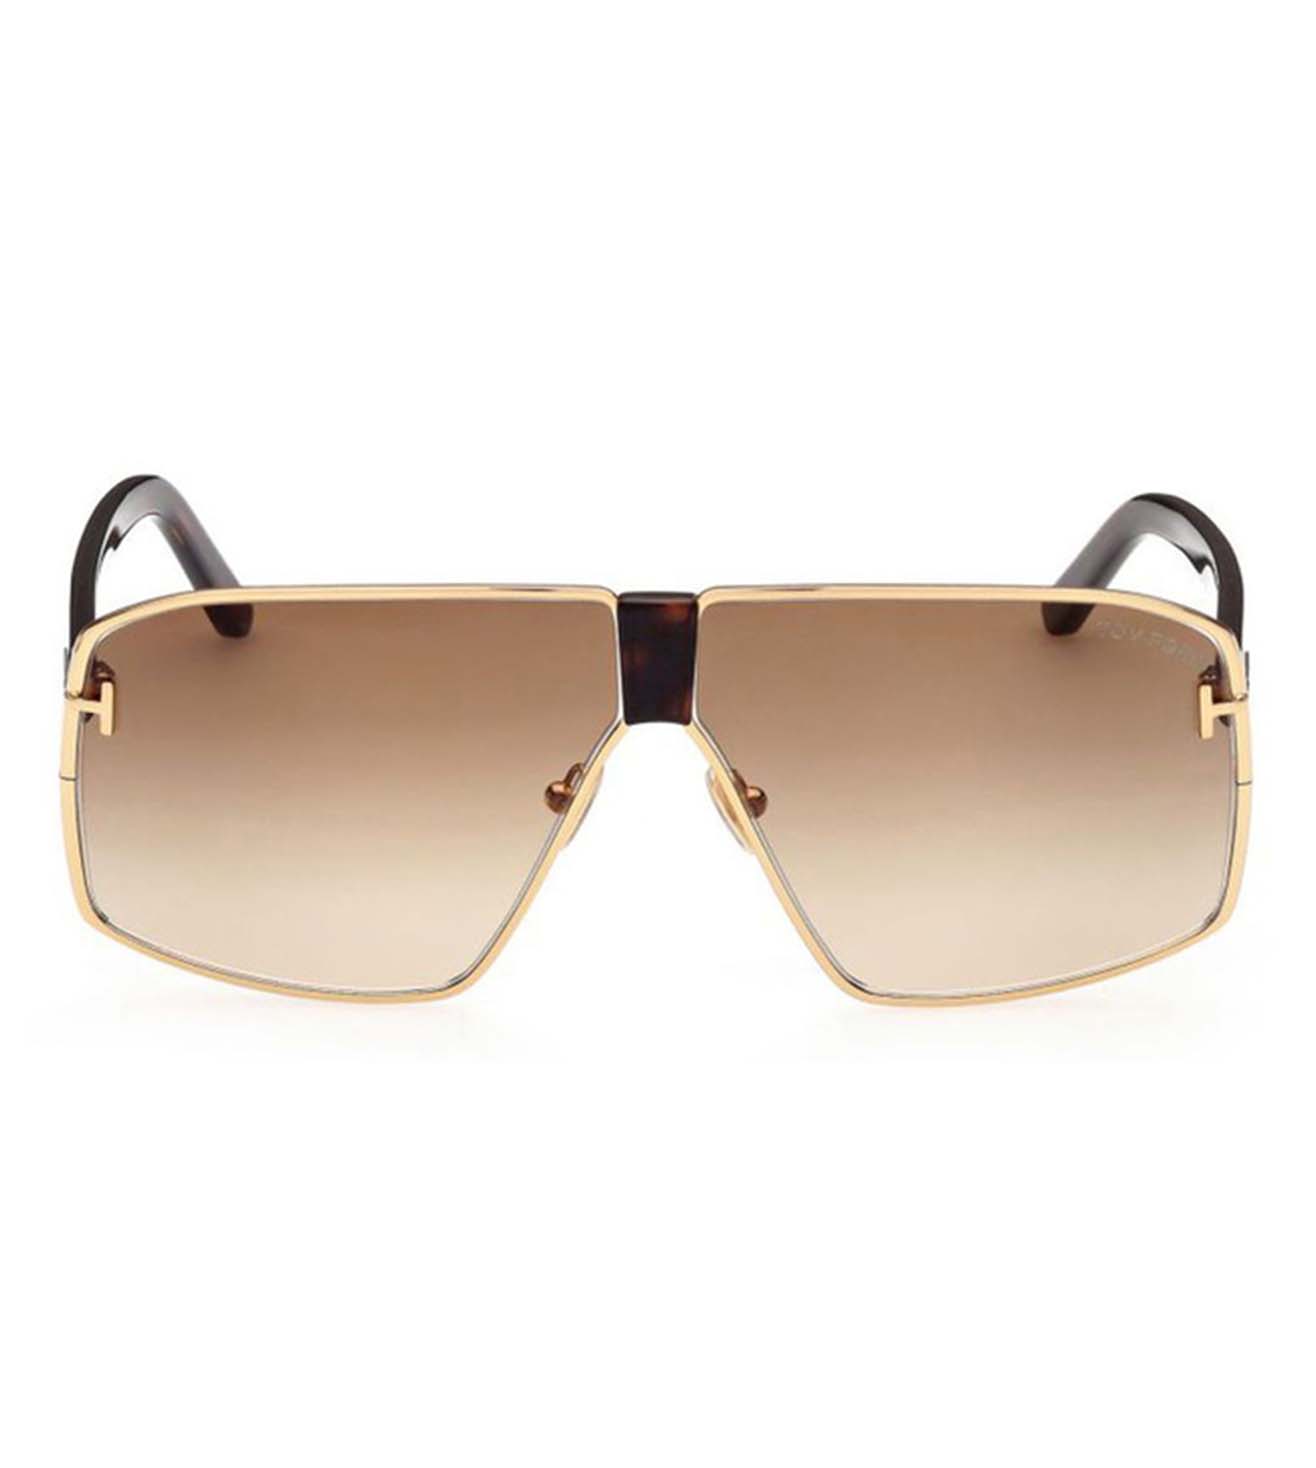 Tom Ford Men's Brown Square Sunglasses